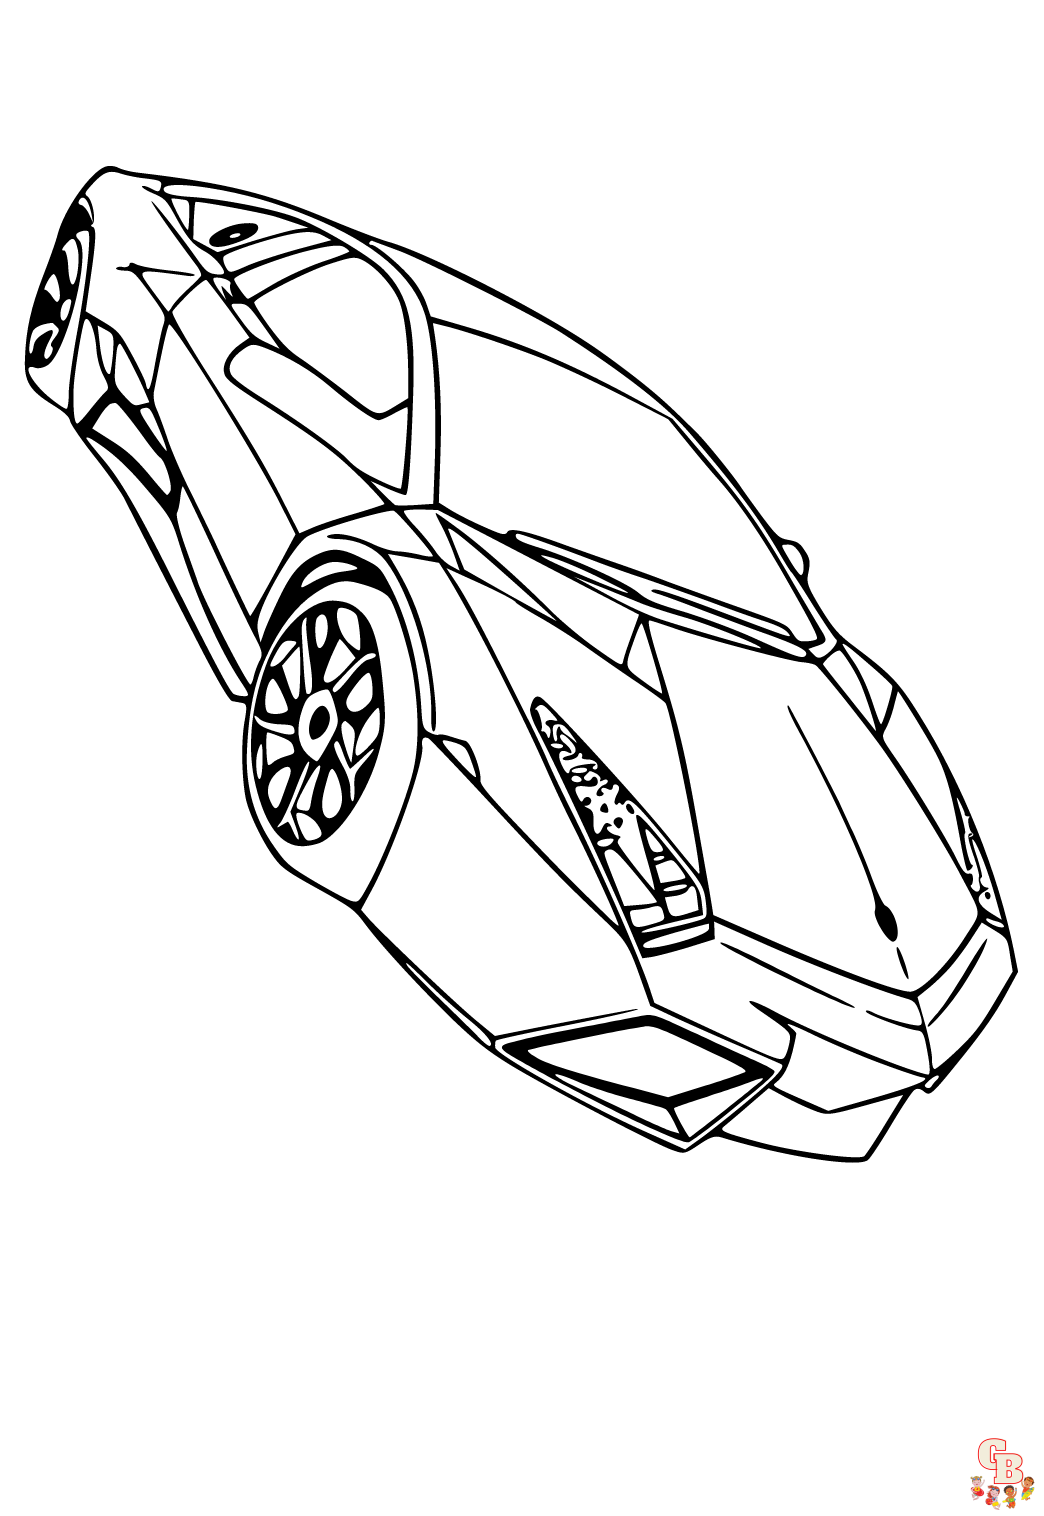 Lamborghini Kleurplaten Aventador, Huracán, Urus en meer!